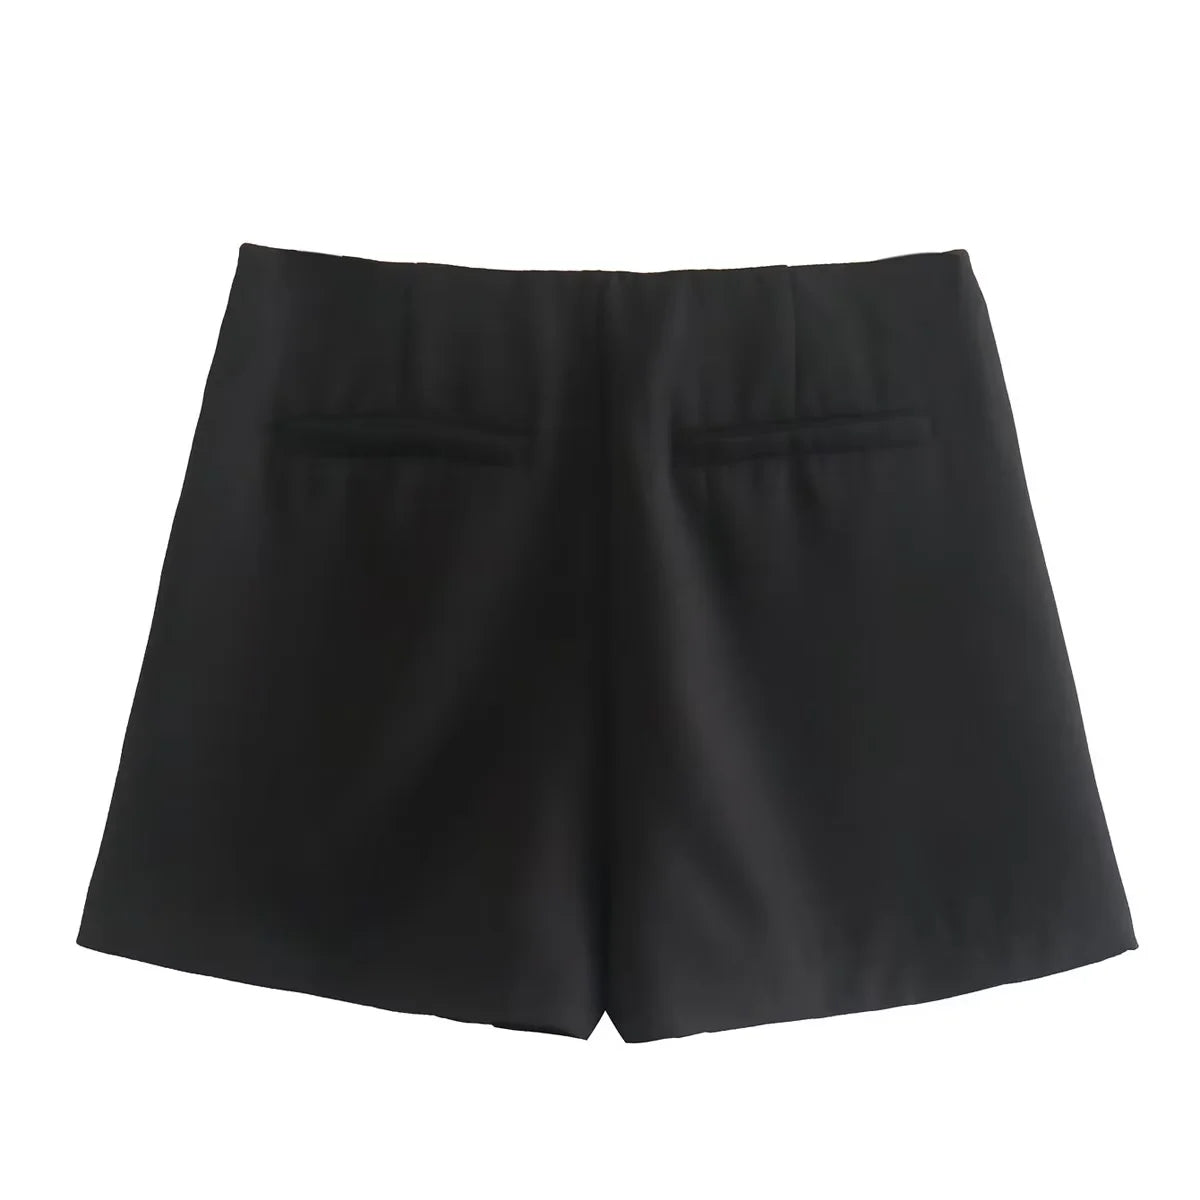 Asymmetrical Skirt With Shorts "Skort"